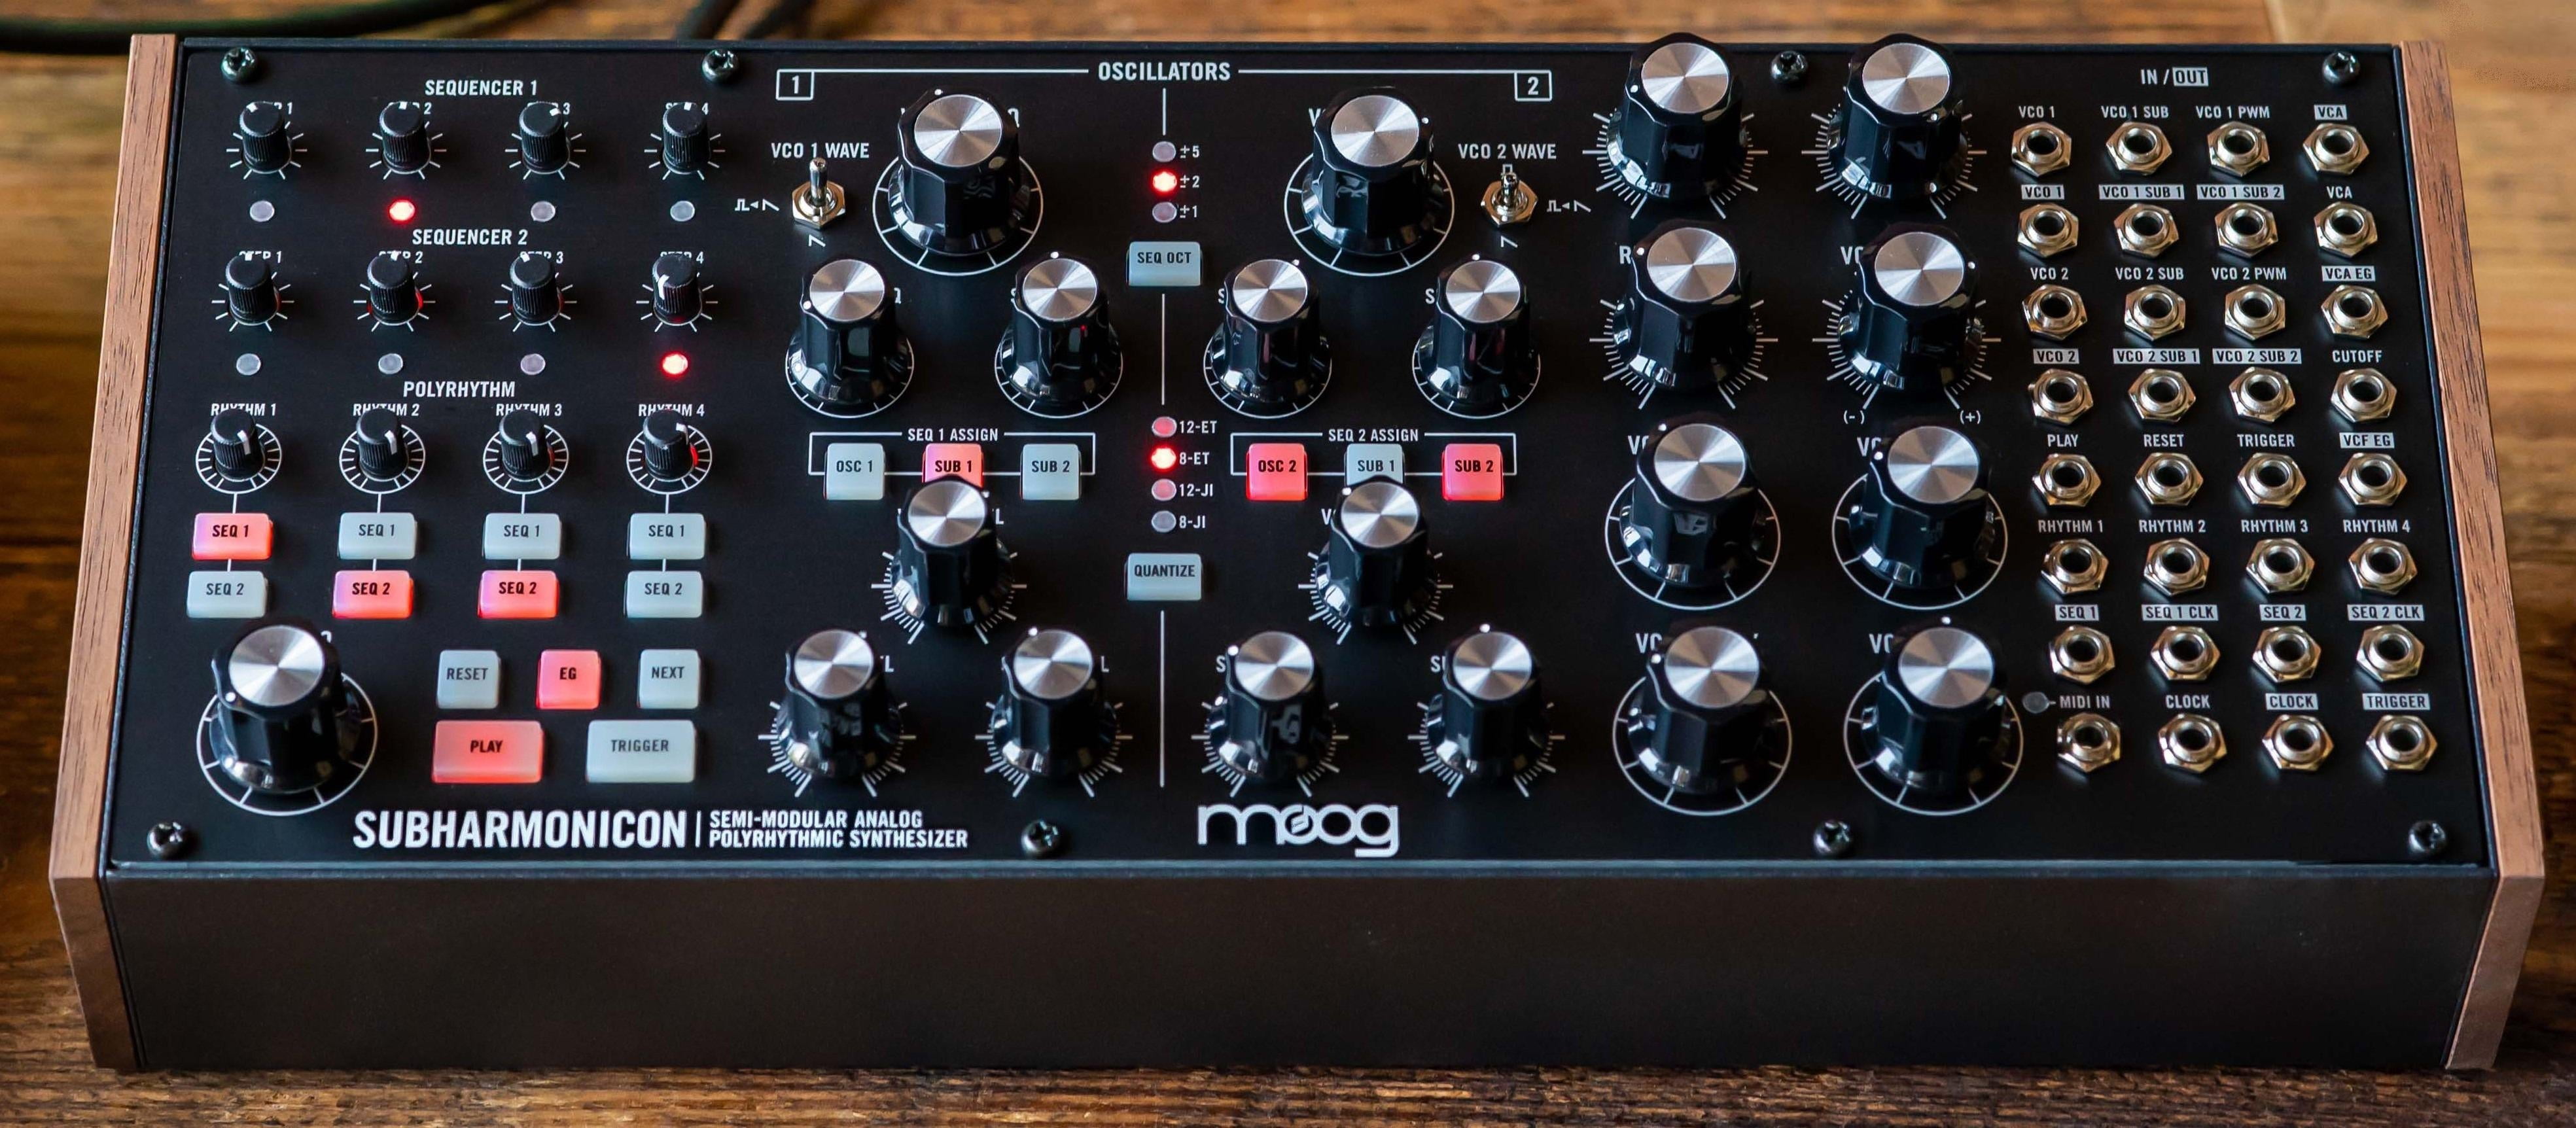 Moog Music Subharmonicon Semi-Modular Polyrhythmic Analog